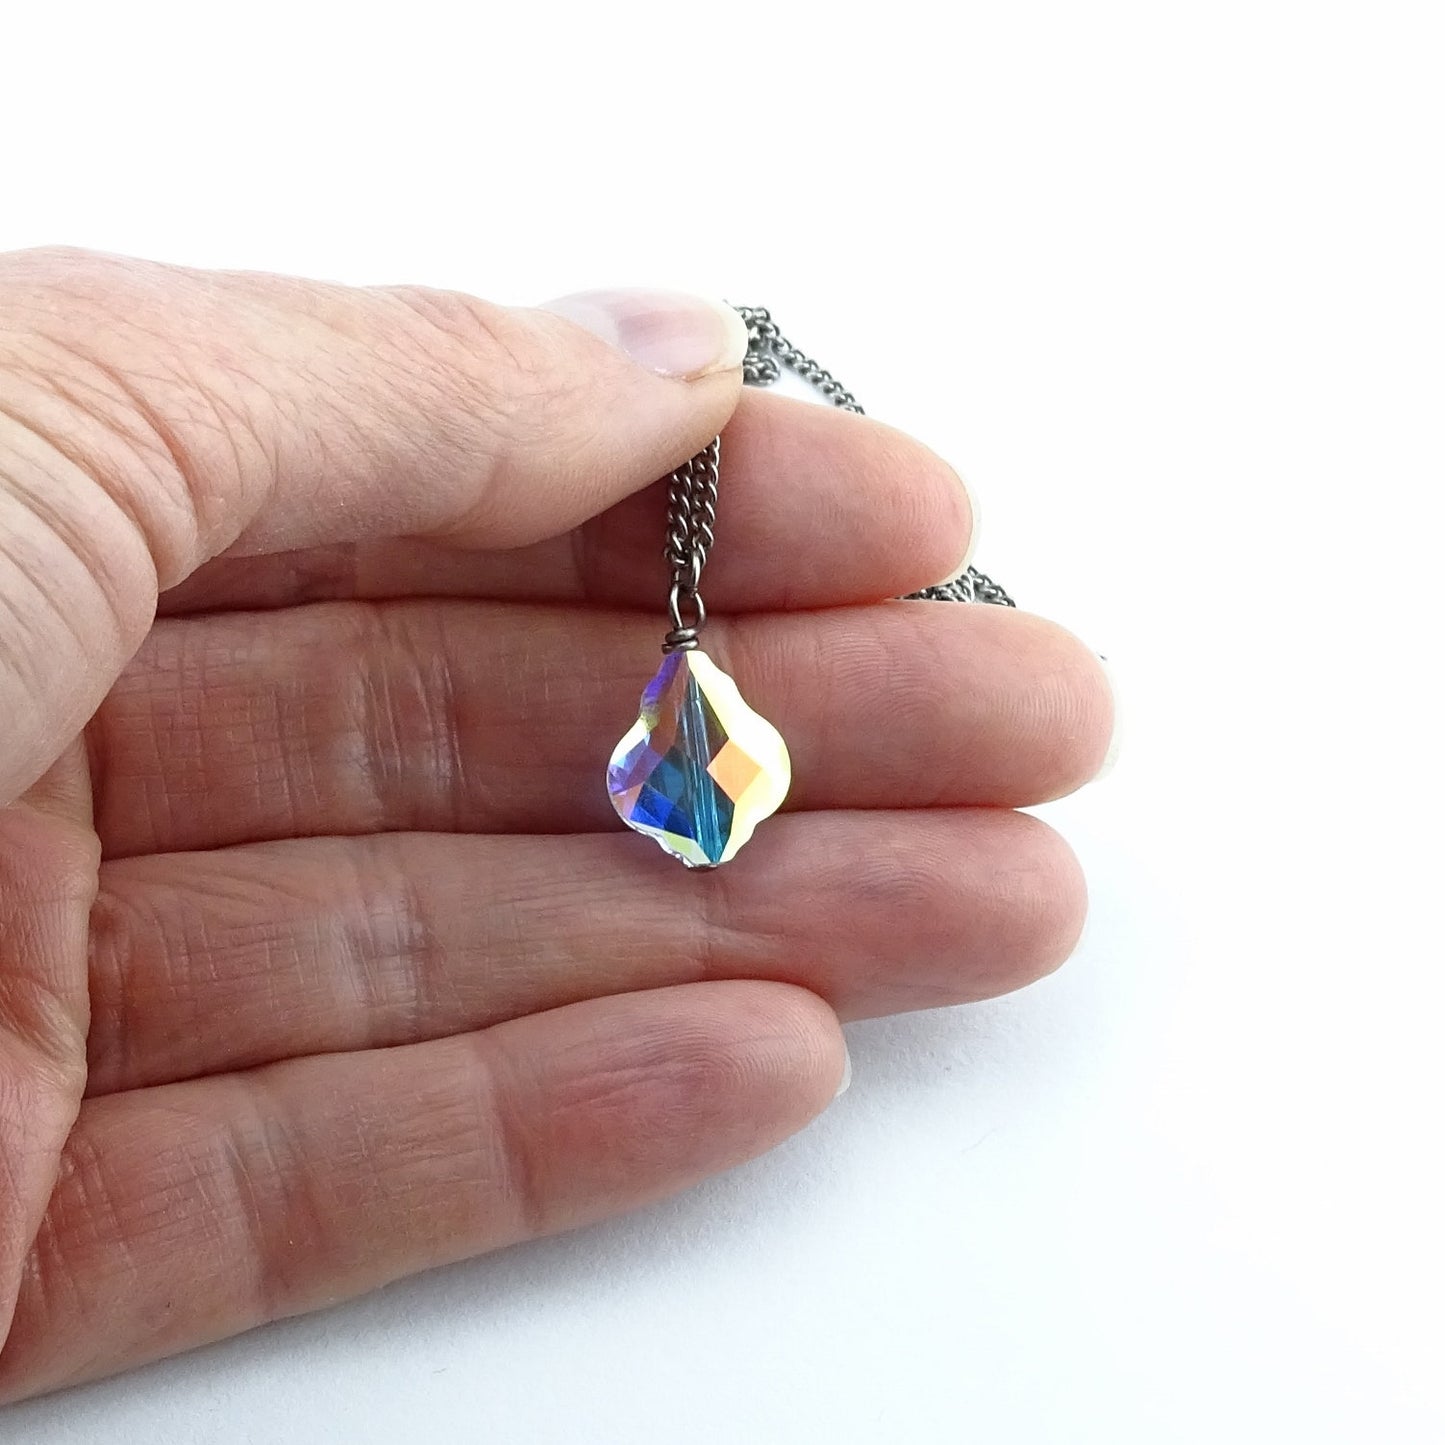 Aurora Borealis Baroque Crystal Titanium Necklace, Nickel Free Necklace For Sensitive Skin, Clear AB Swarovski Crystal Pure Titanium Jewelry